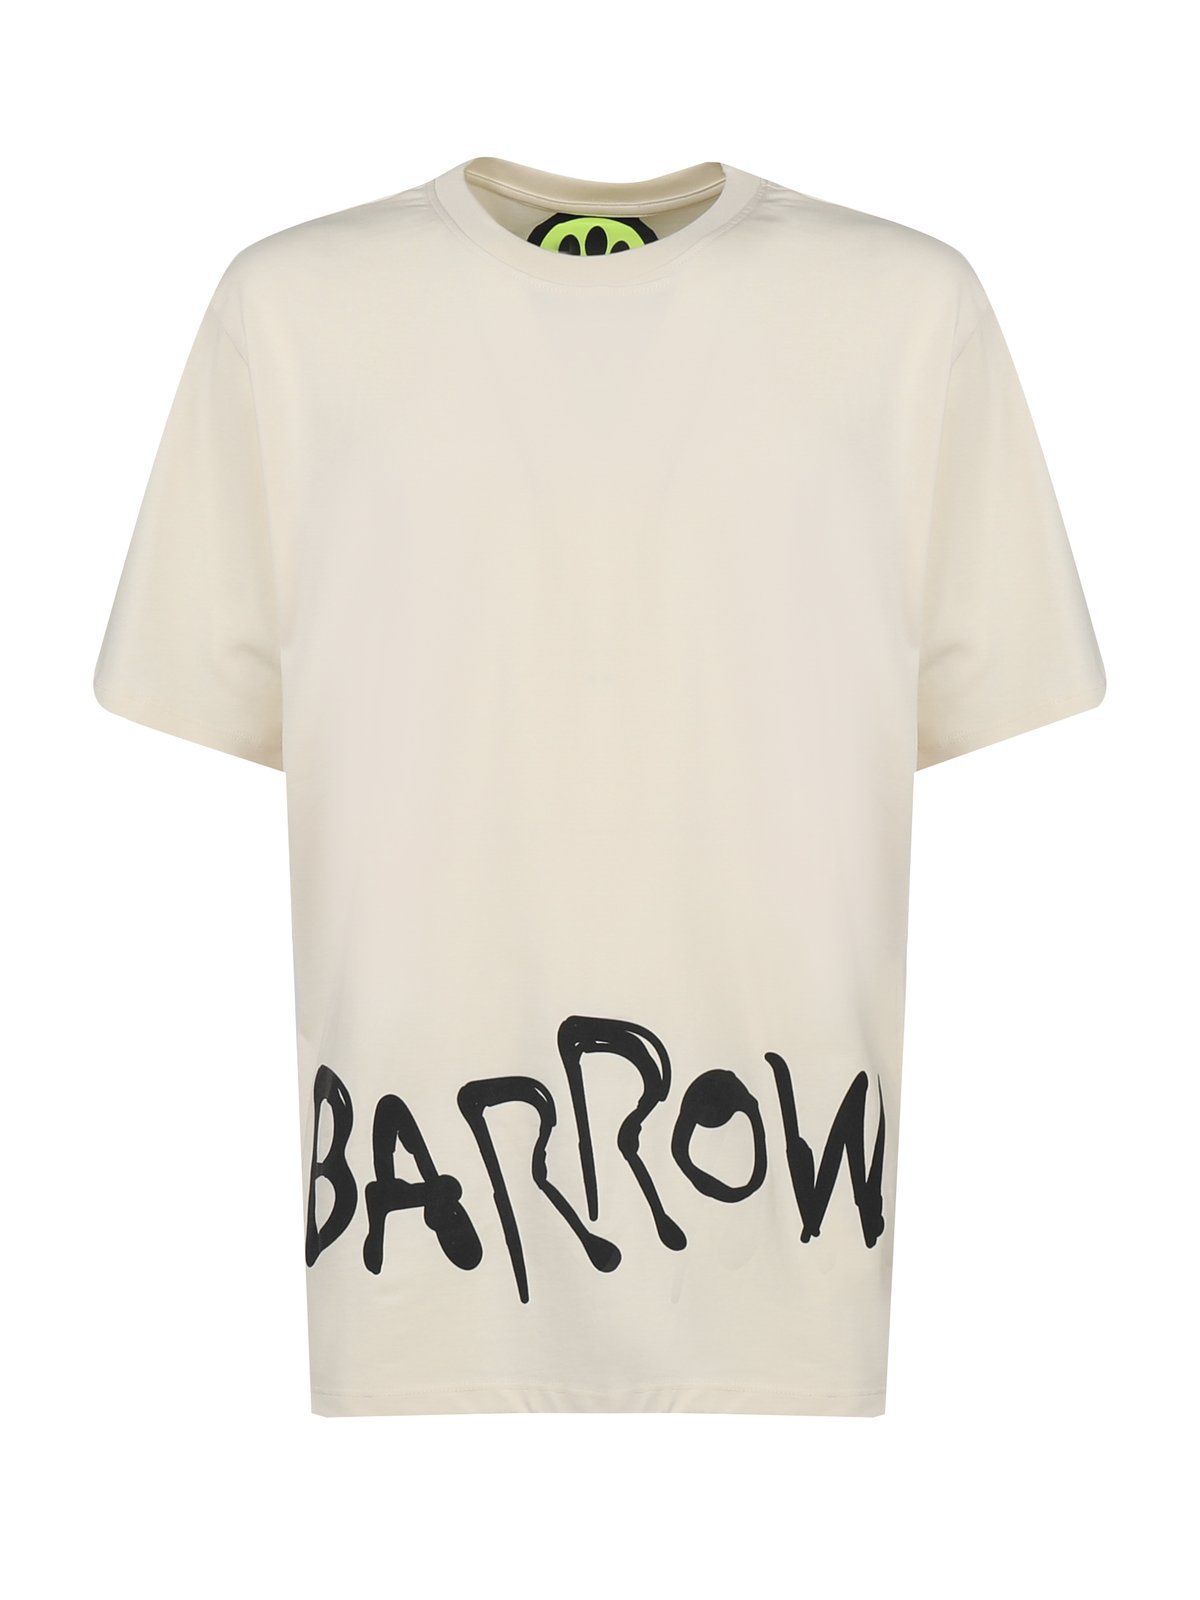 Barrow 그래픽 프린트 크루넥 티셔츠